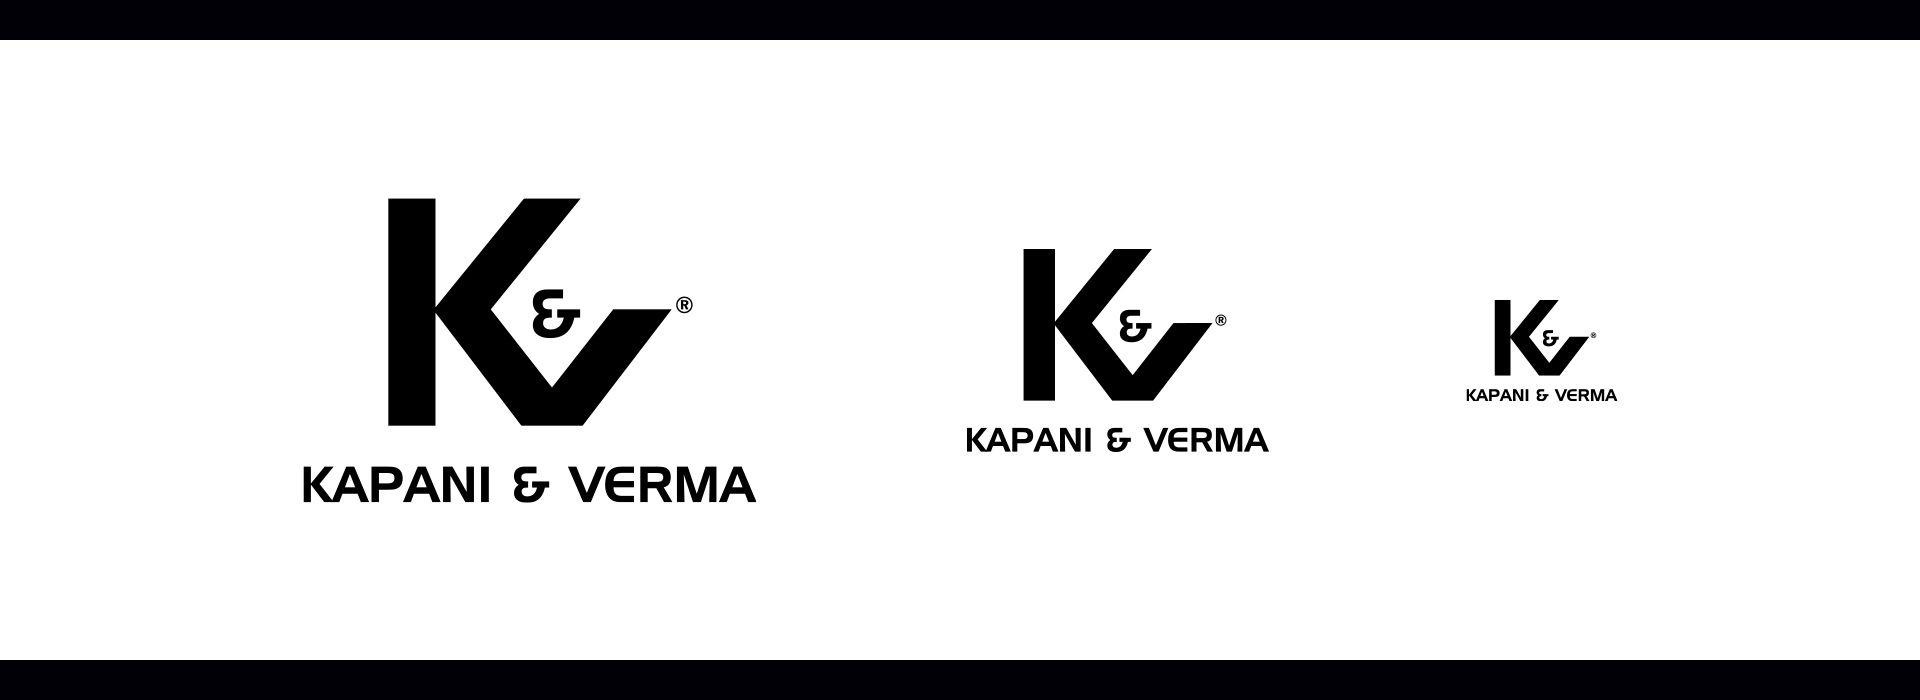 High End Apparel Logo - Logo Design for Apparel Company Kapani & Verma | Design Studio | KD ...